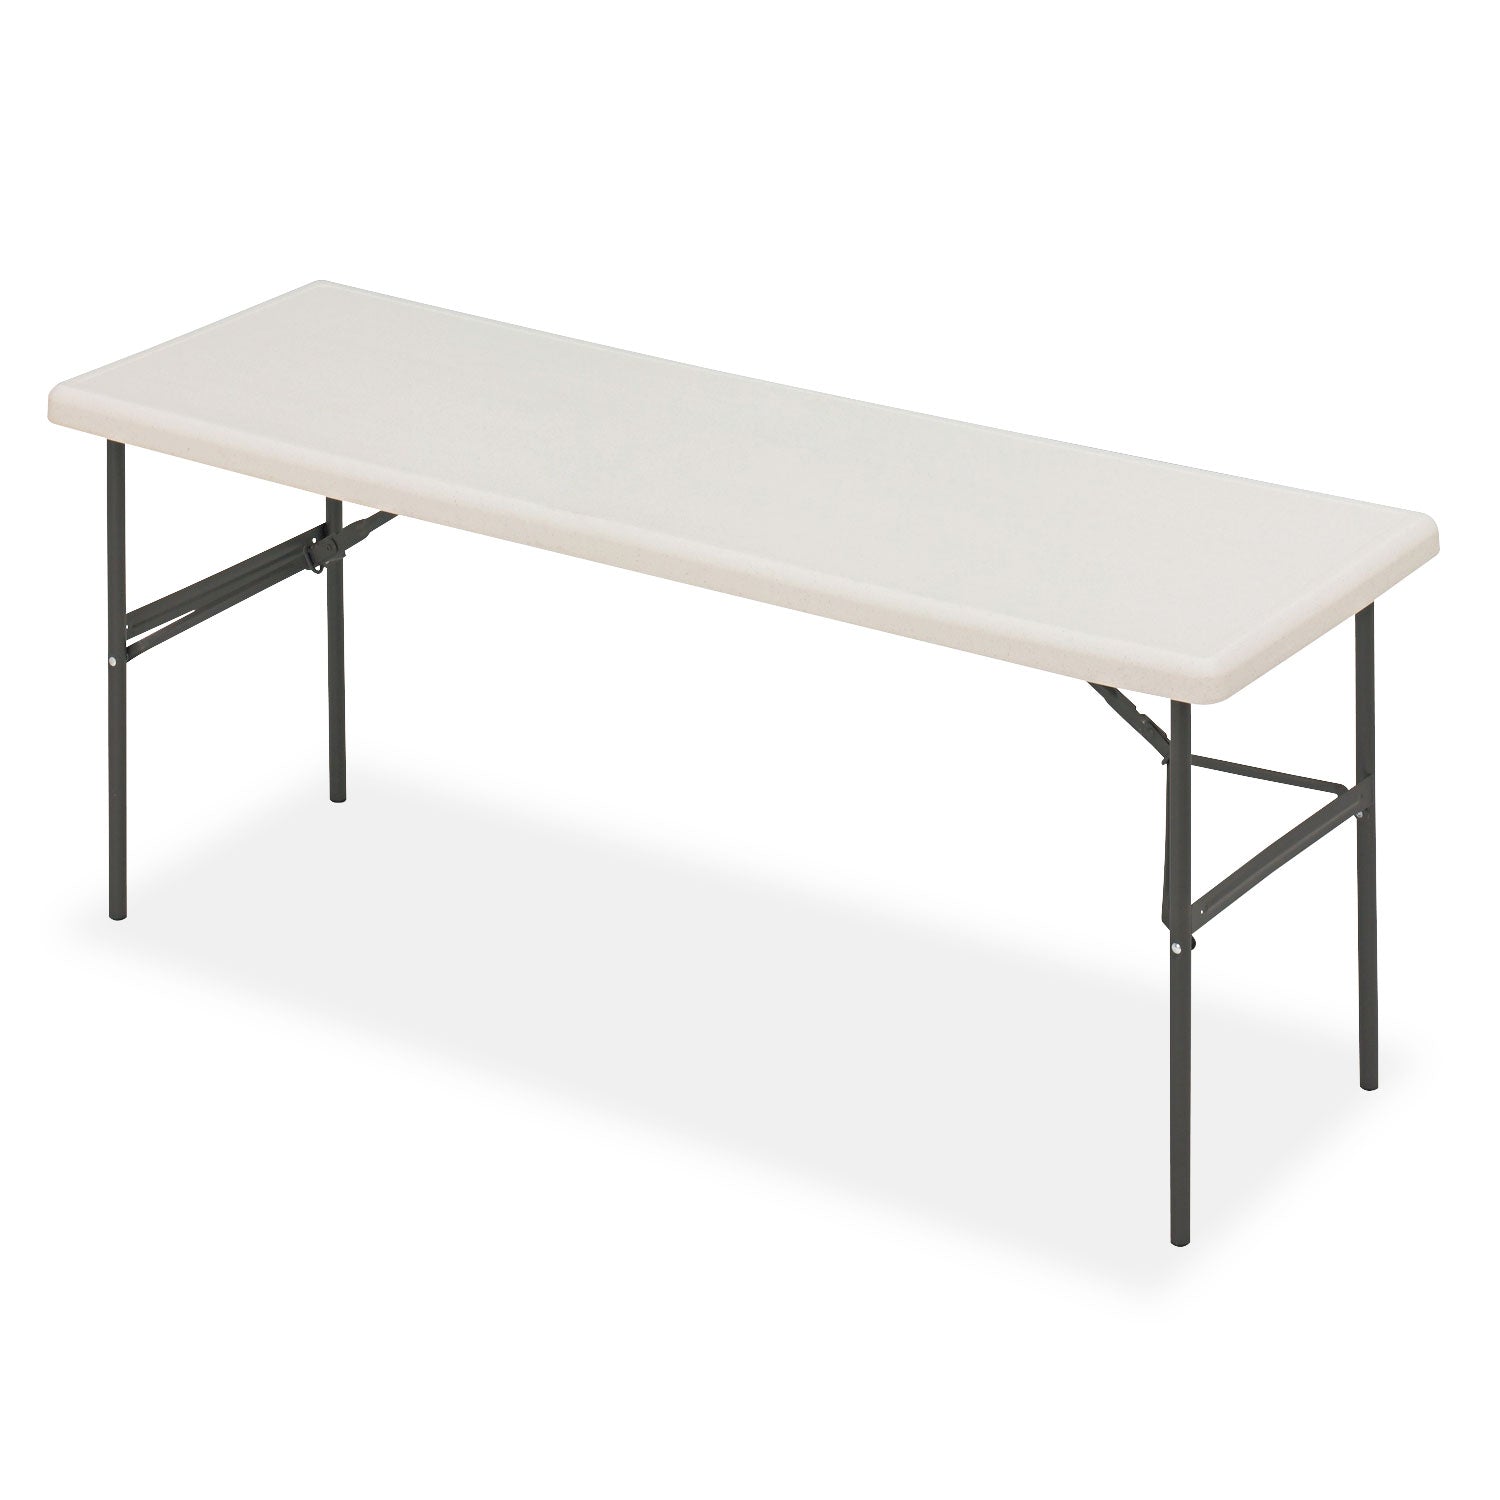 IndestrucTable Classic Folding Table, Rectangular, 72" x 24" x 29", Platinum - 